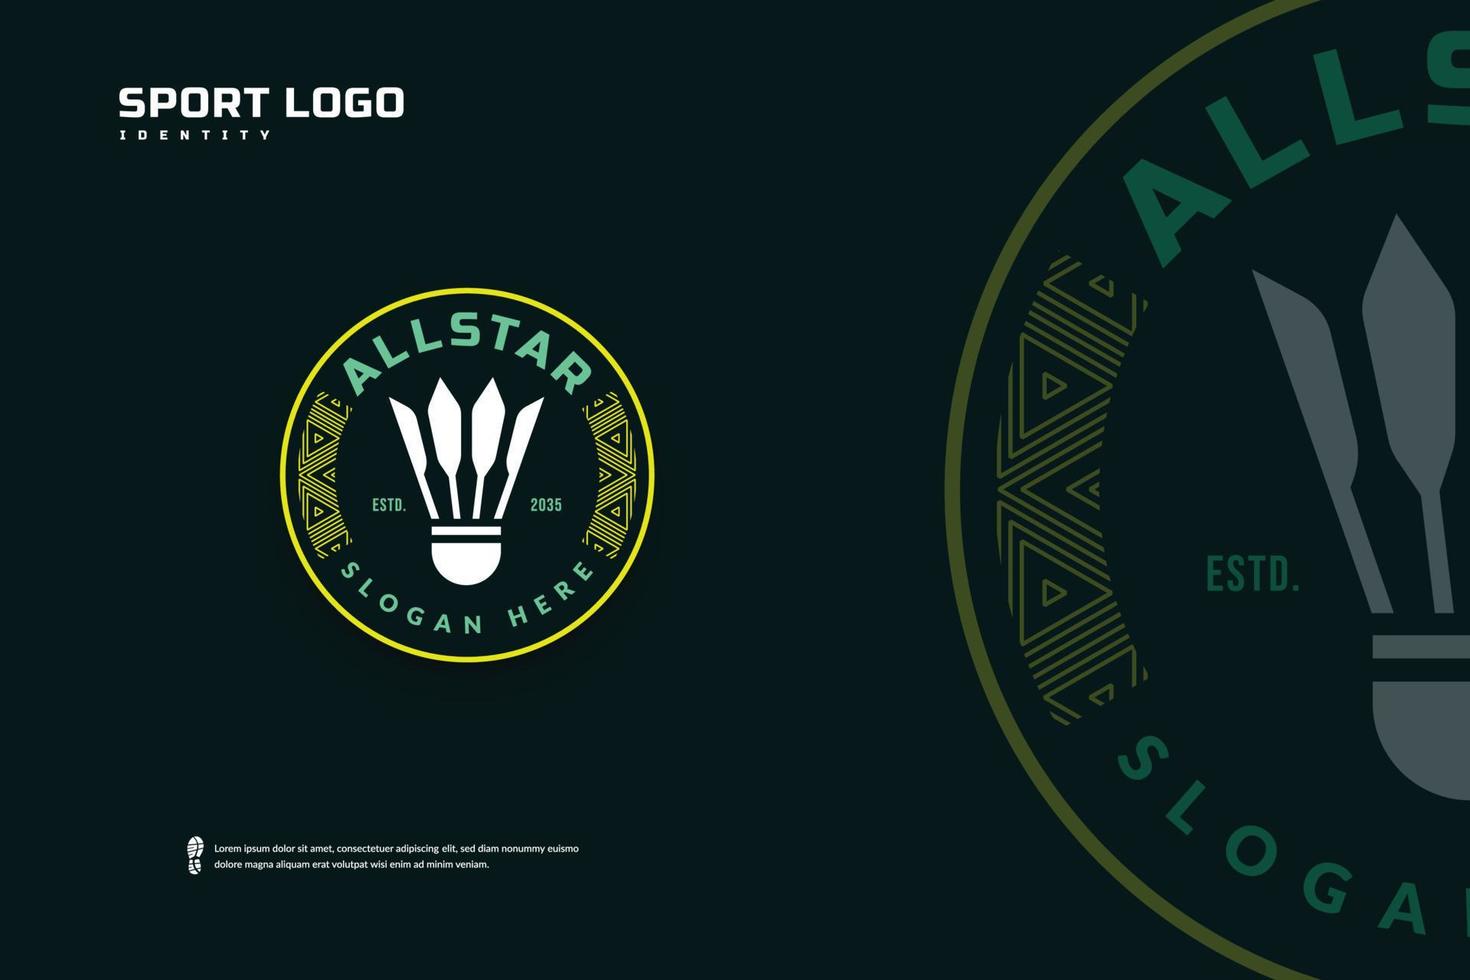 Badminton club logo, Badminton tournament emblems template. Sport team badge vector design